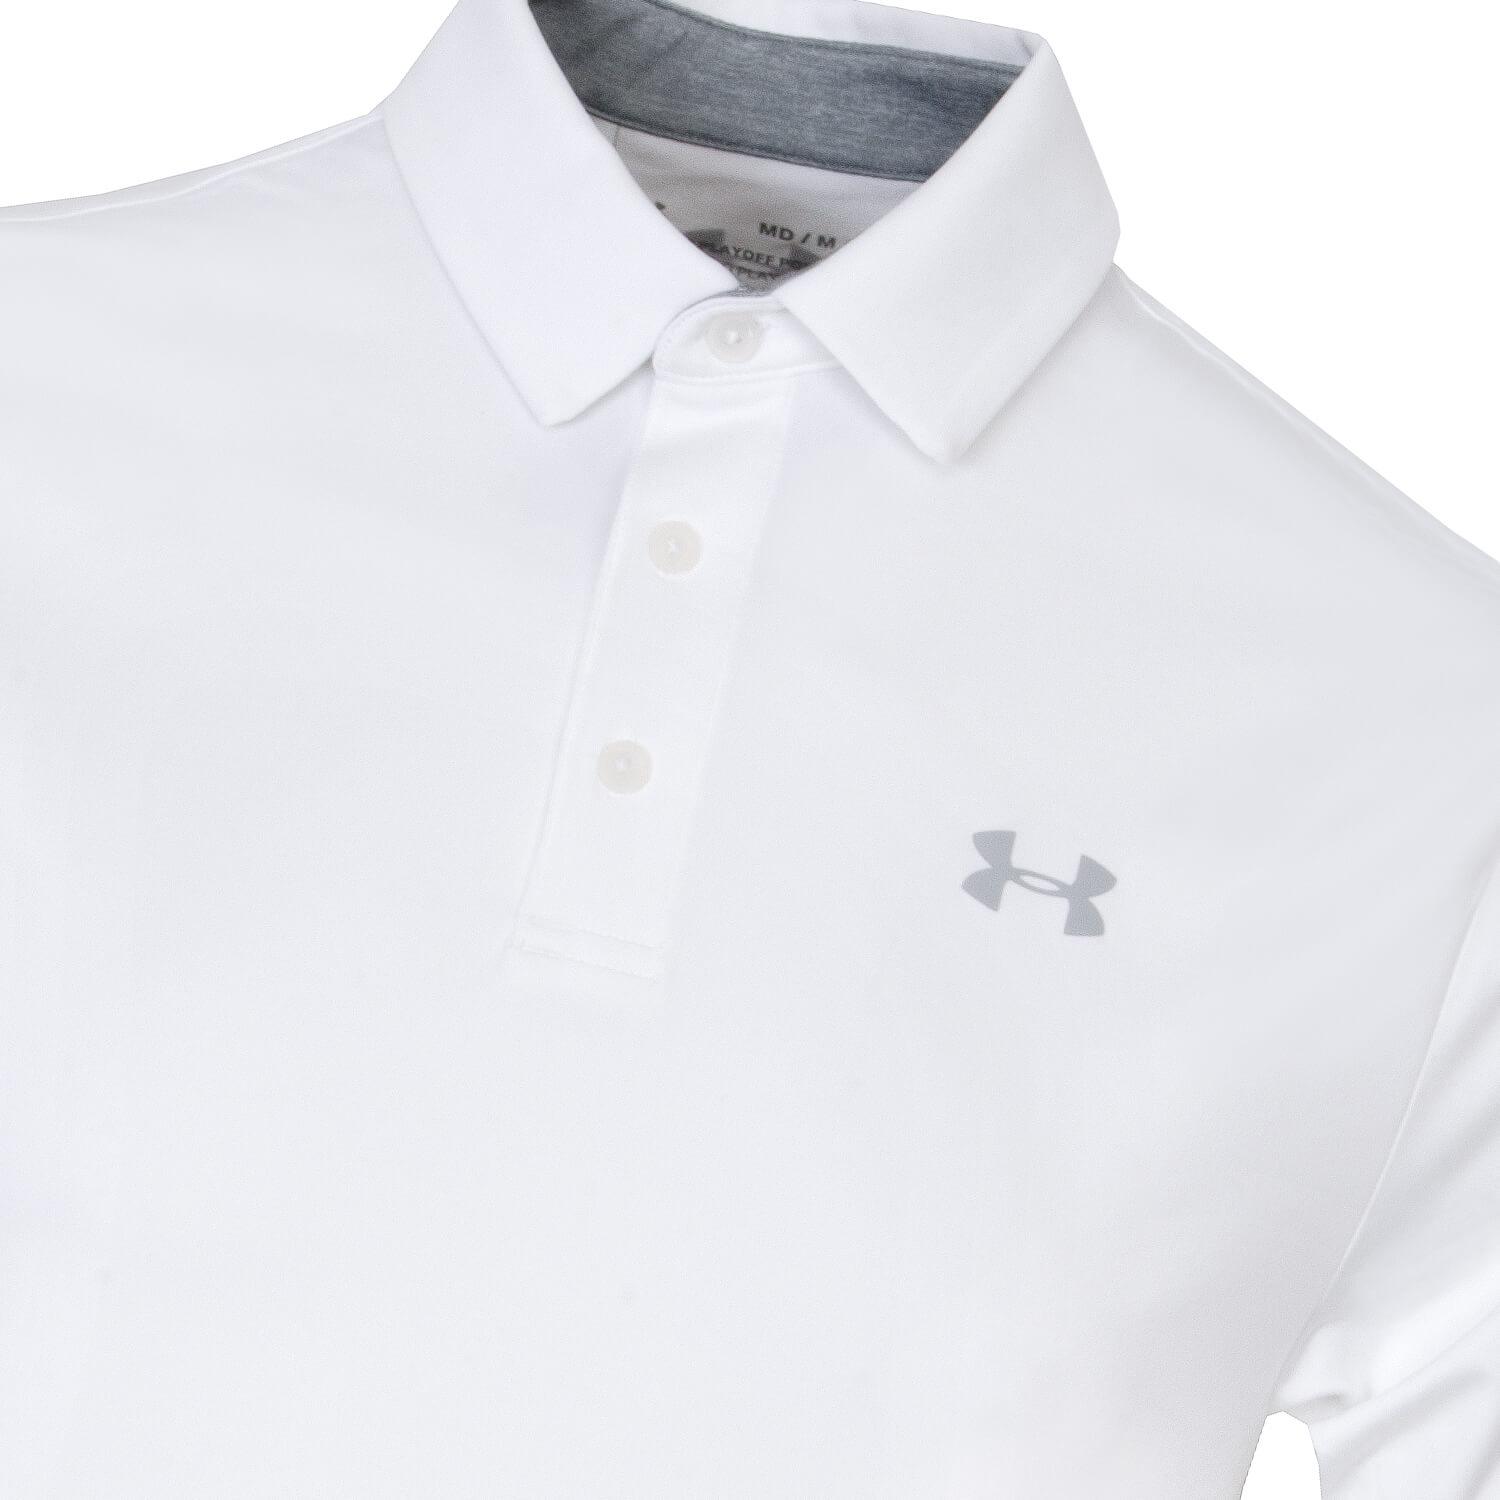 Under Armour Playoff 2.0 Polo Shirt White/Mod Grey | Scottsdale Golf